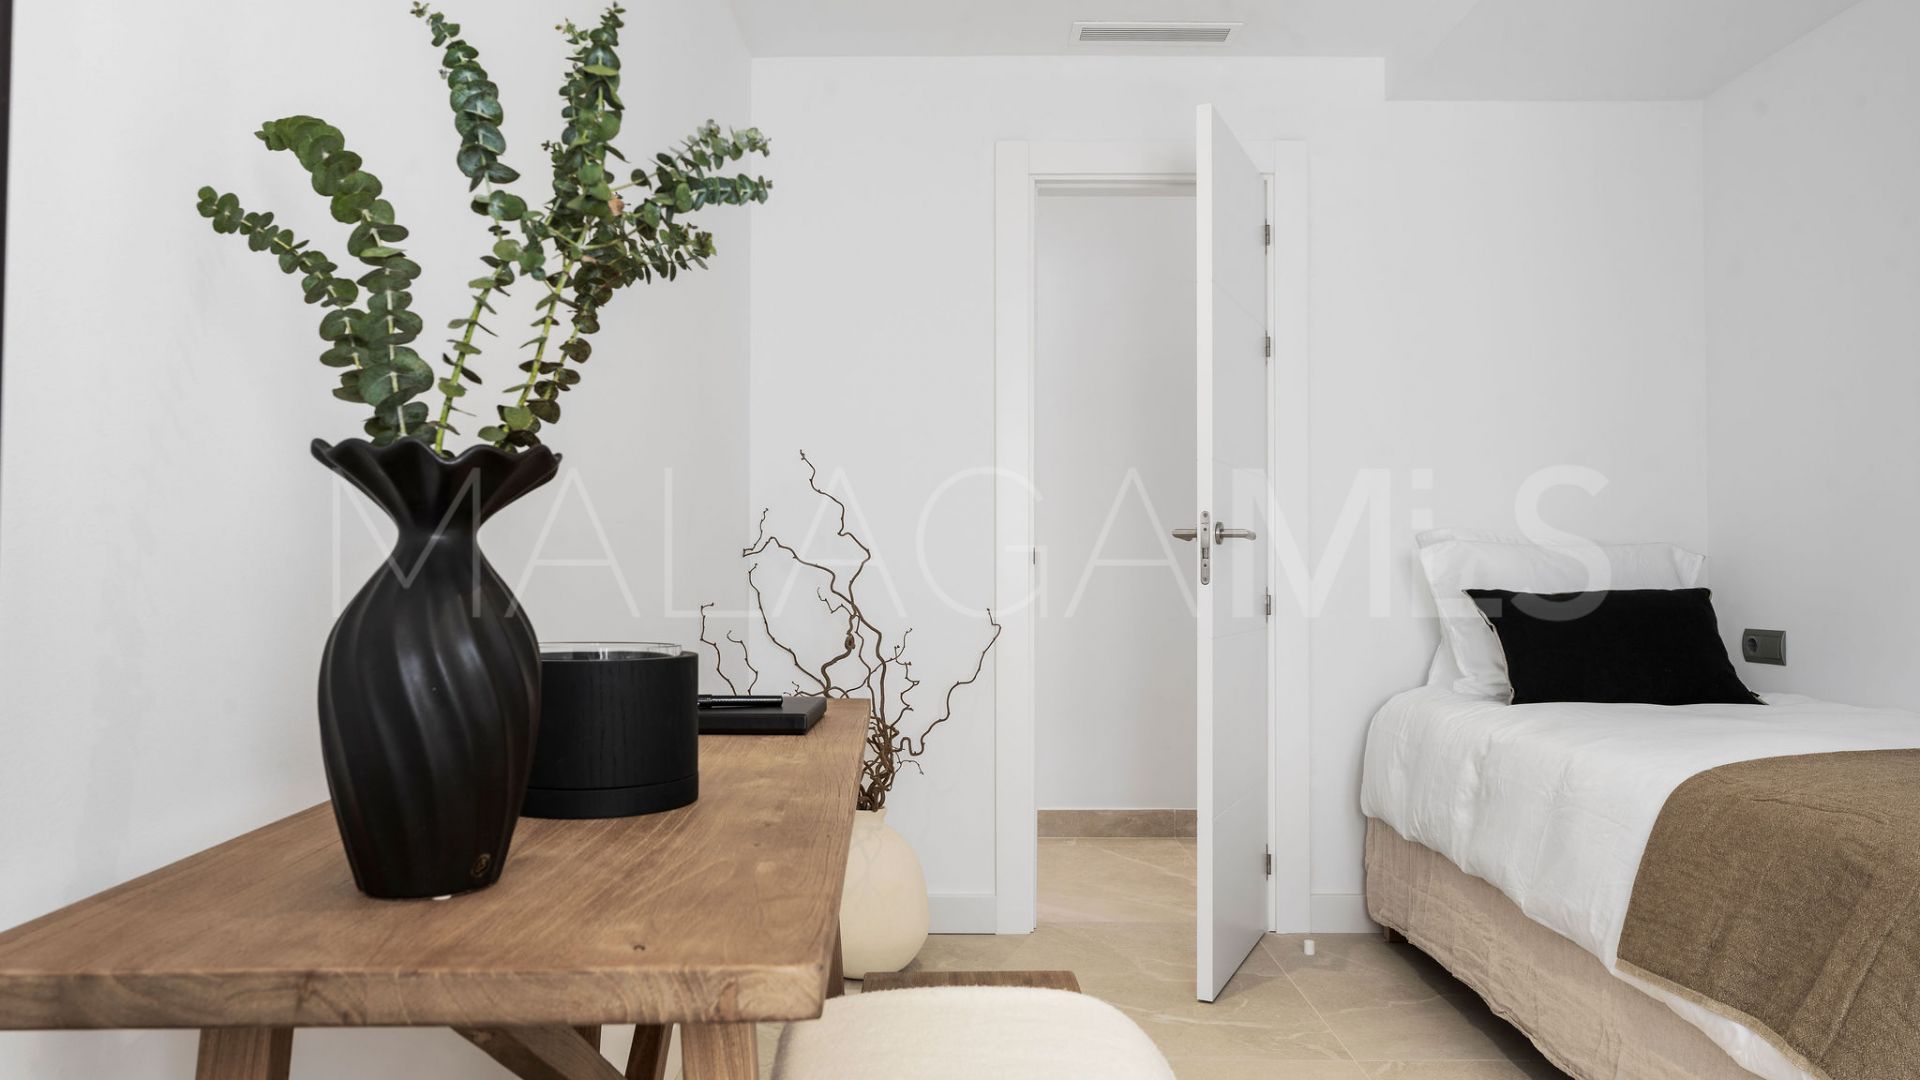 3 bedrooms Aldea Blanca ground floor apartment for sale